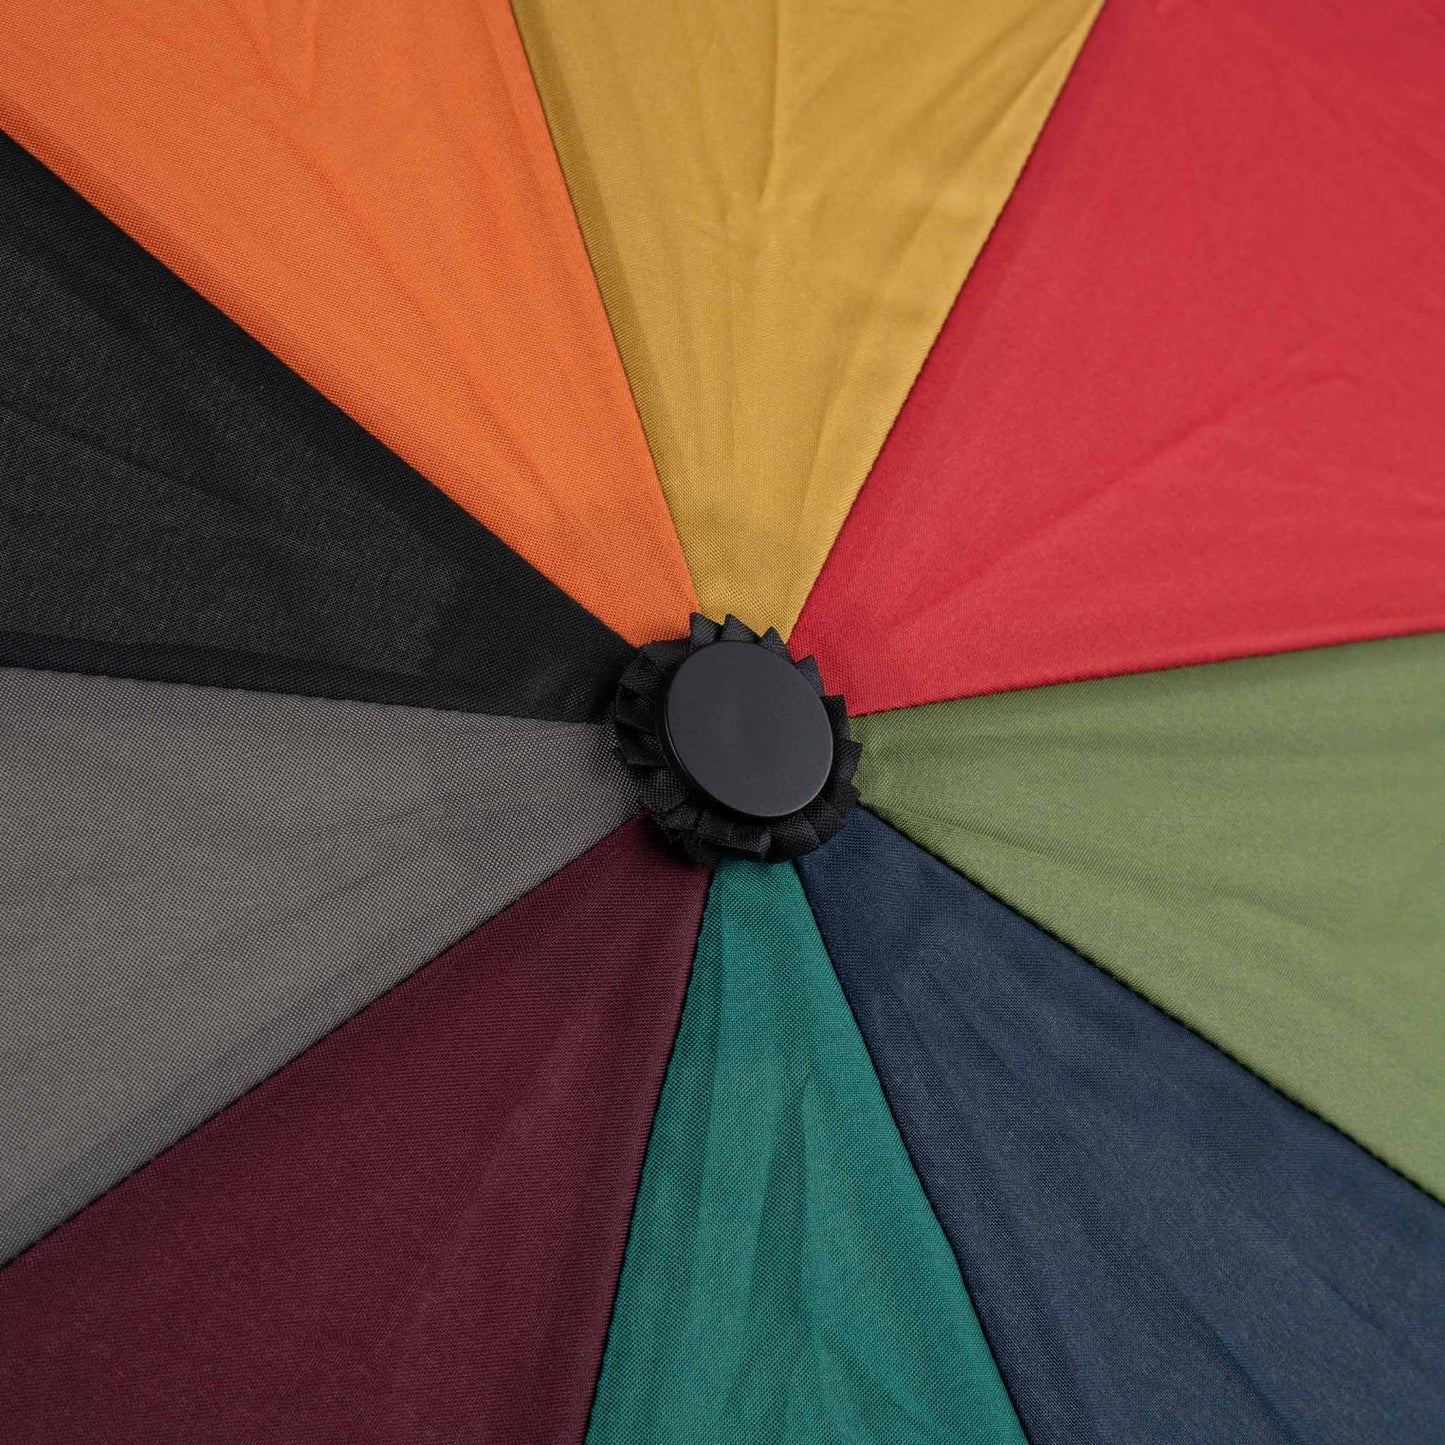 Waterloo rainbow - recycled & eco-friendly umbrella